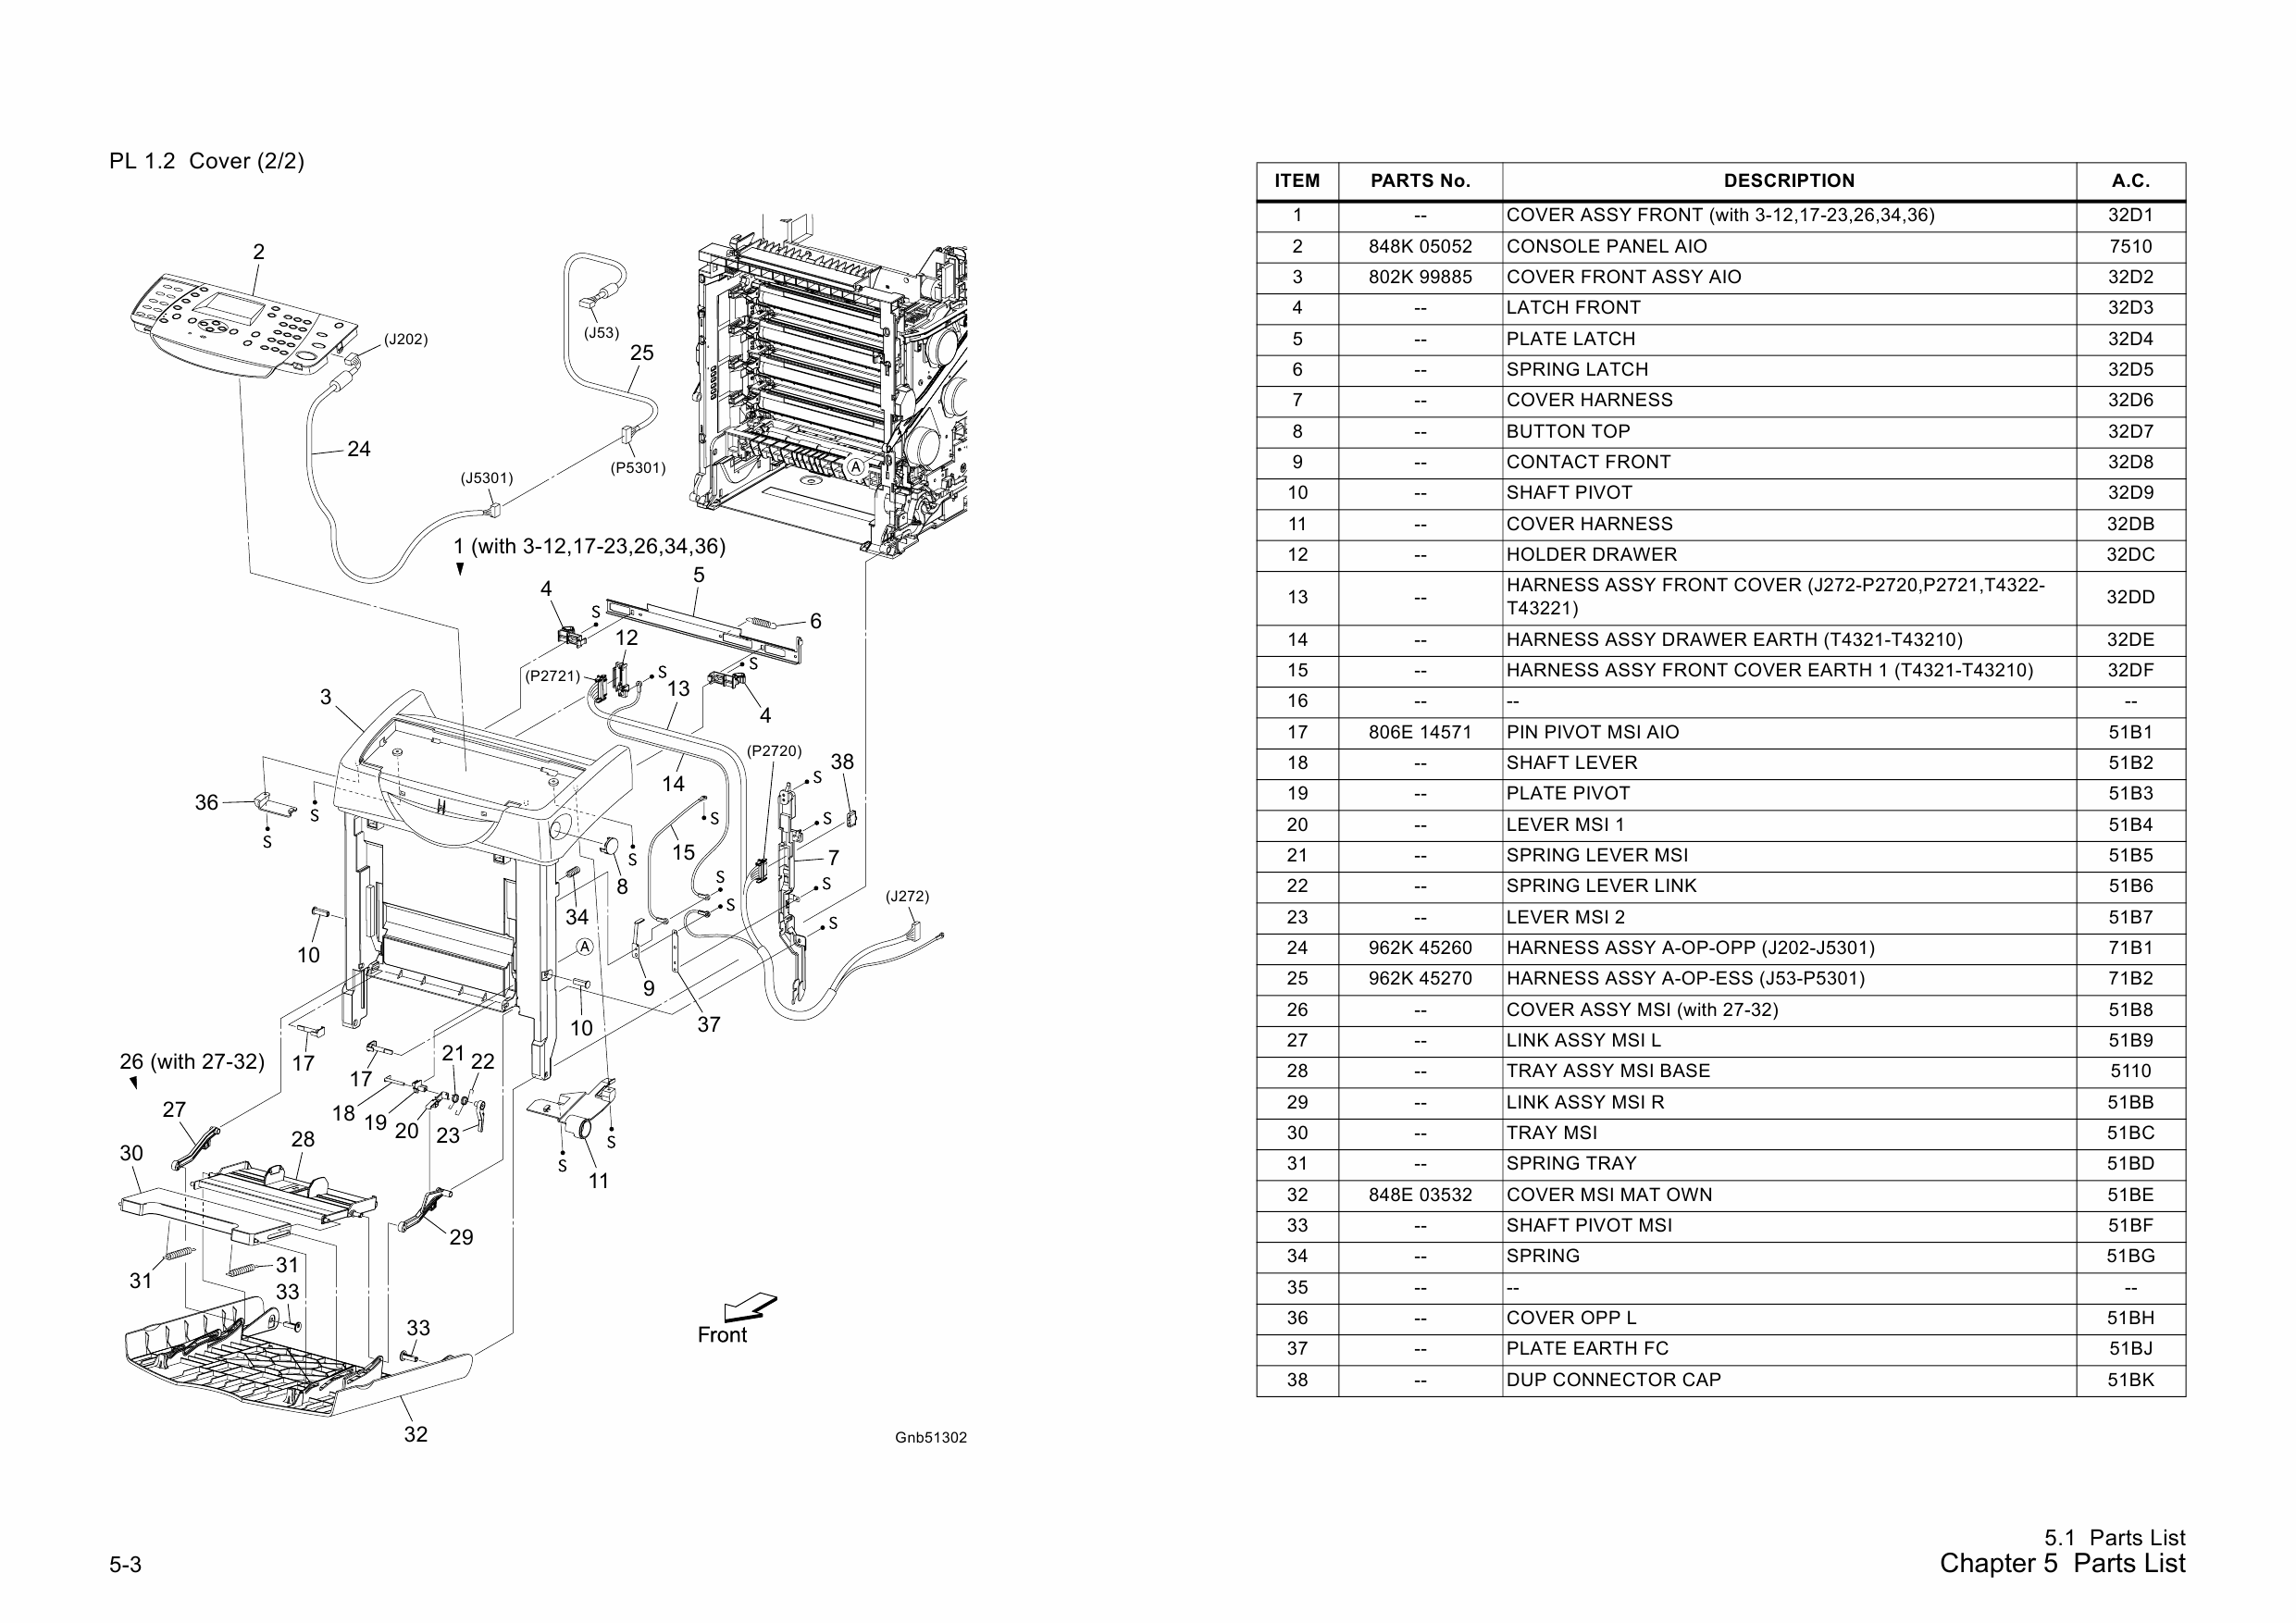 Xerox DocuPrint C3290 FS Fuji Color-MultiFunction-Printer Parts List and Service Manual-5